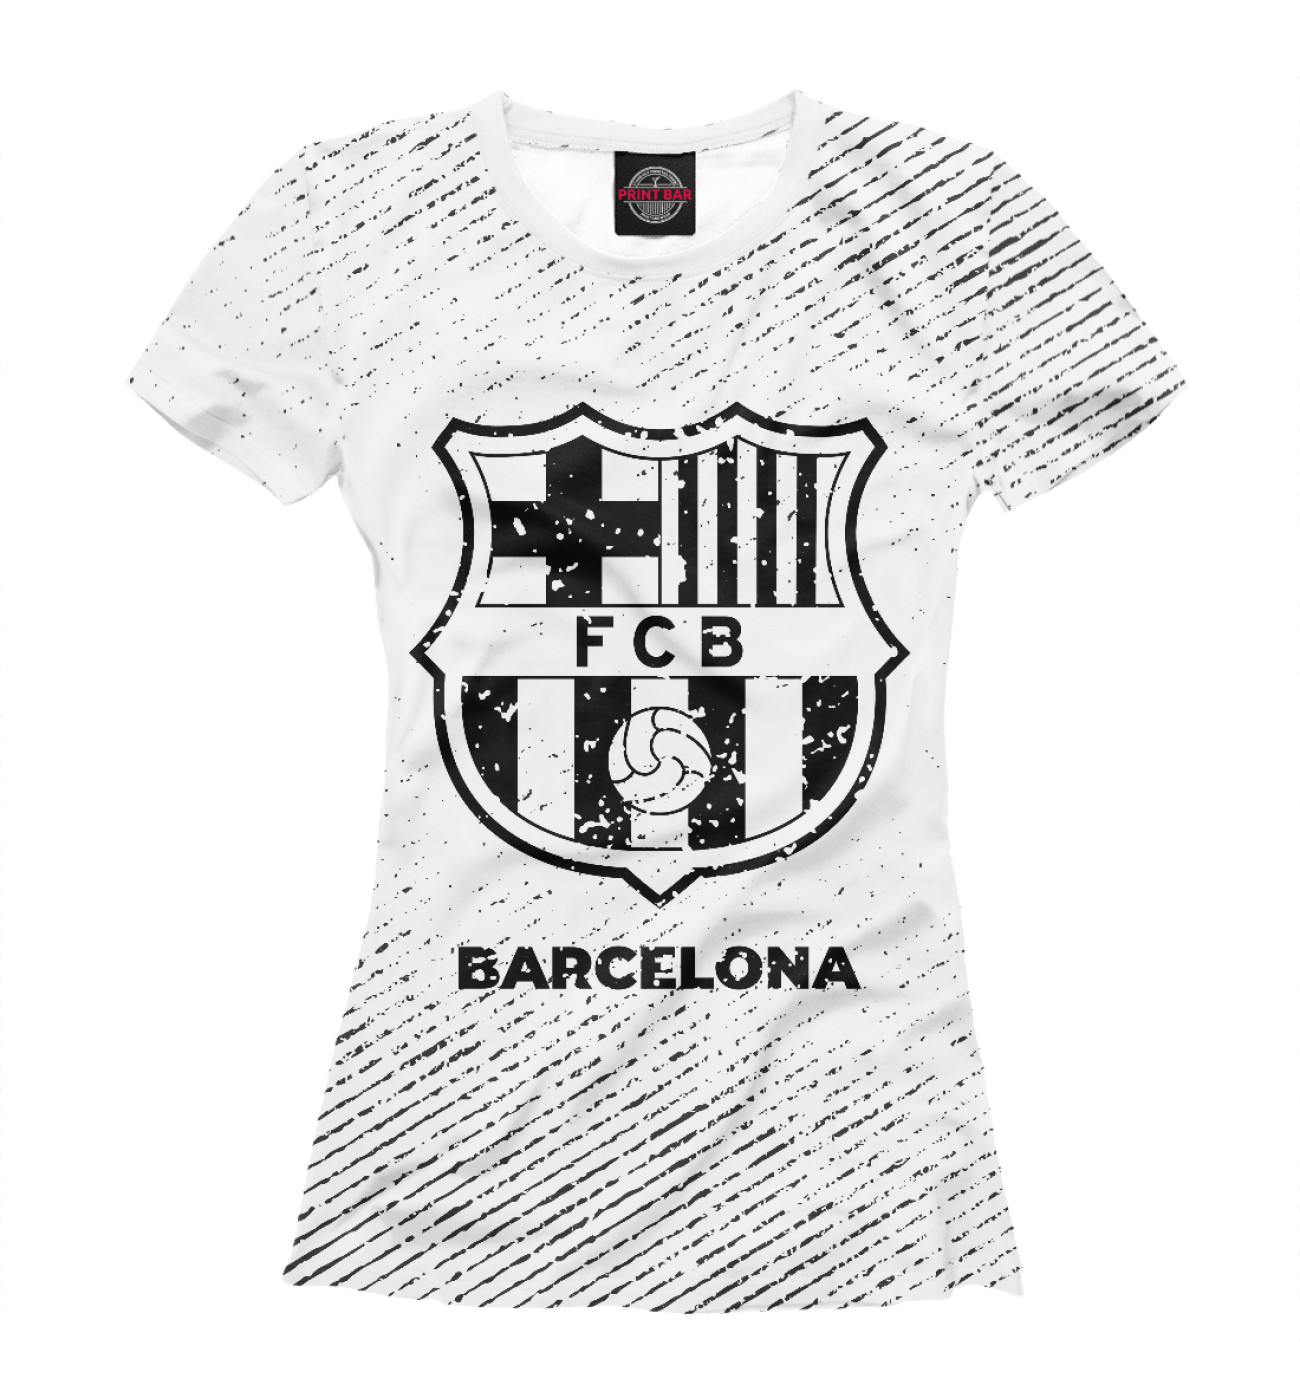 Женская Футболка Barcelona гранж светлый, артикул: BAR-261944-fut-1